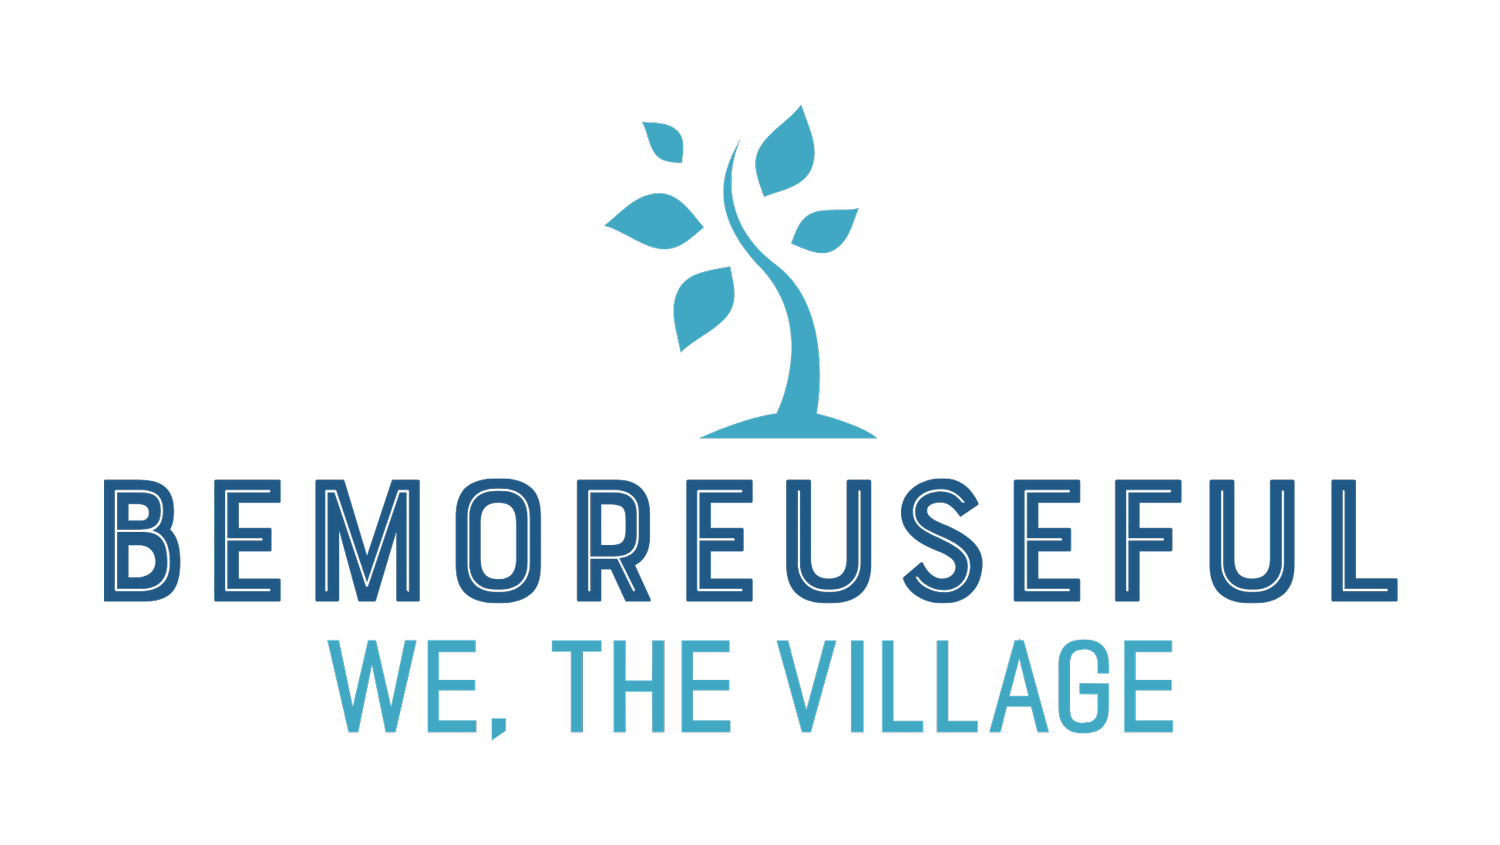 BeMoreUseful,  Purpose Engagement Platform, ask for help or offer help from the community, community service.